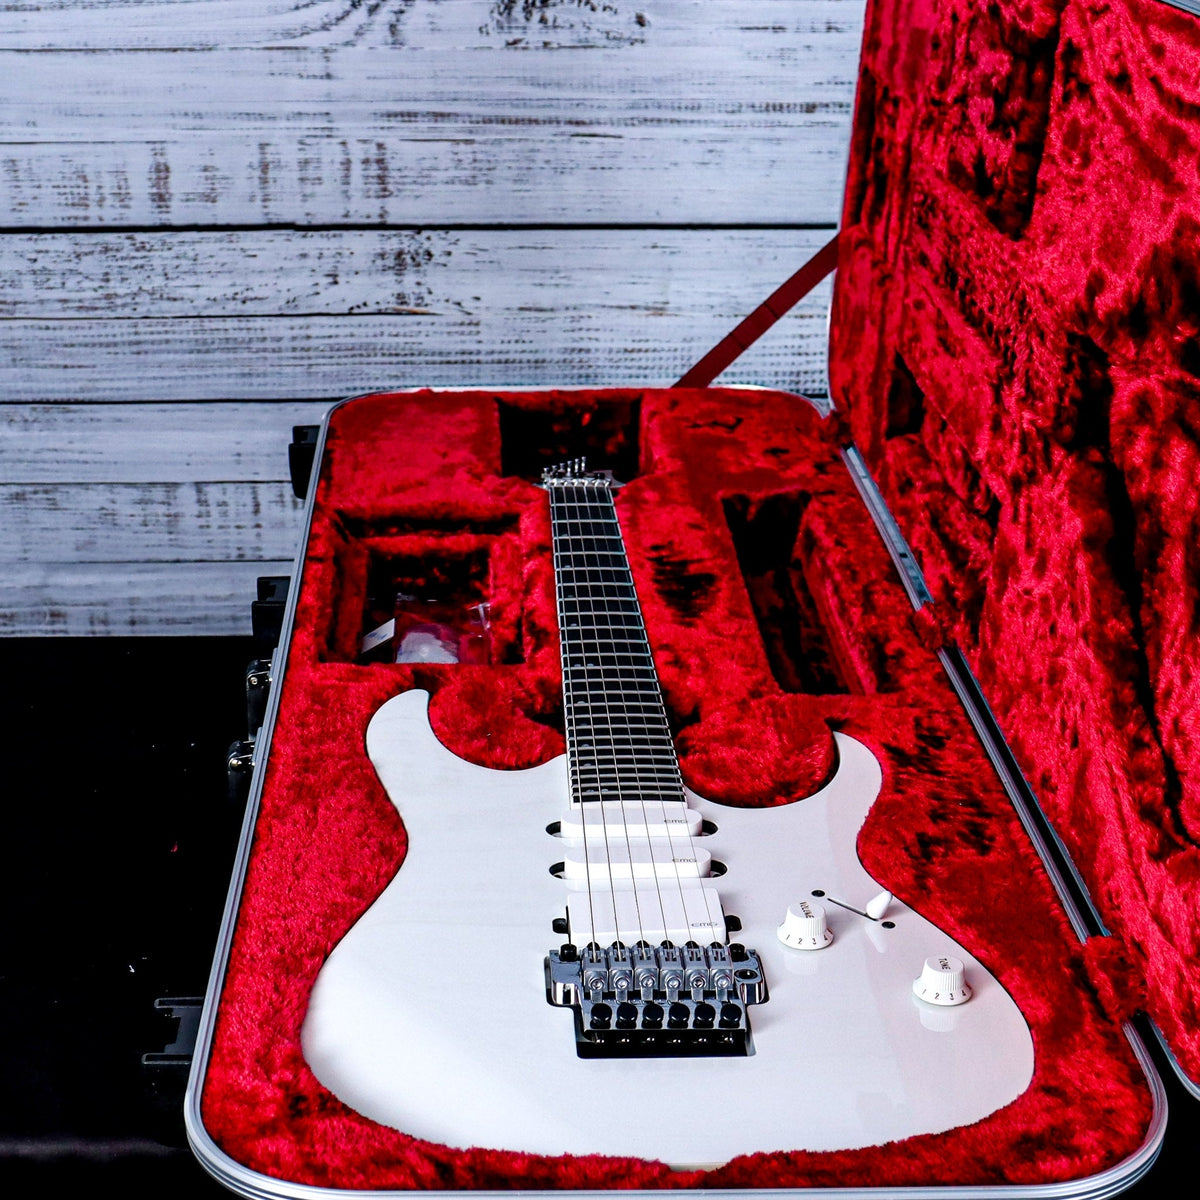 Ibanez RG5440C Prestige Electric Guitar | Pearl White